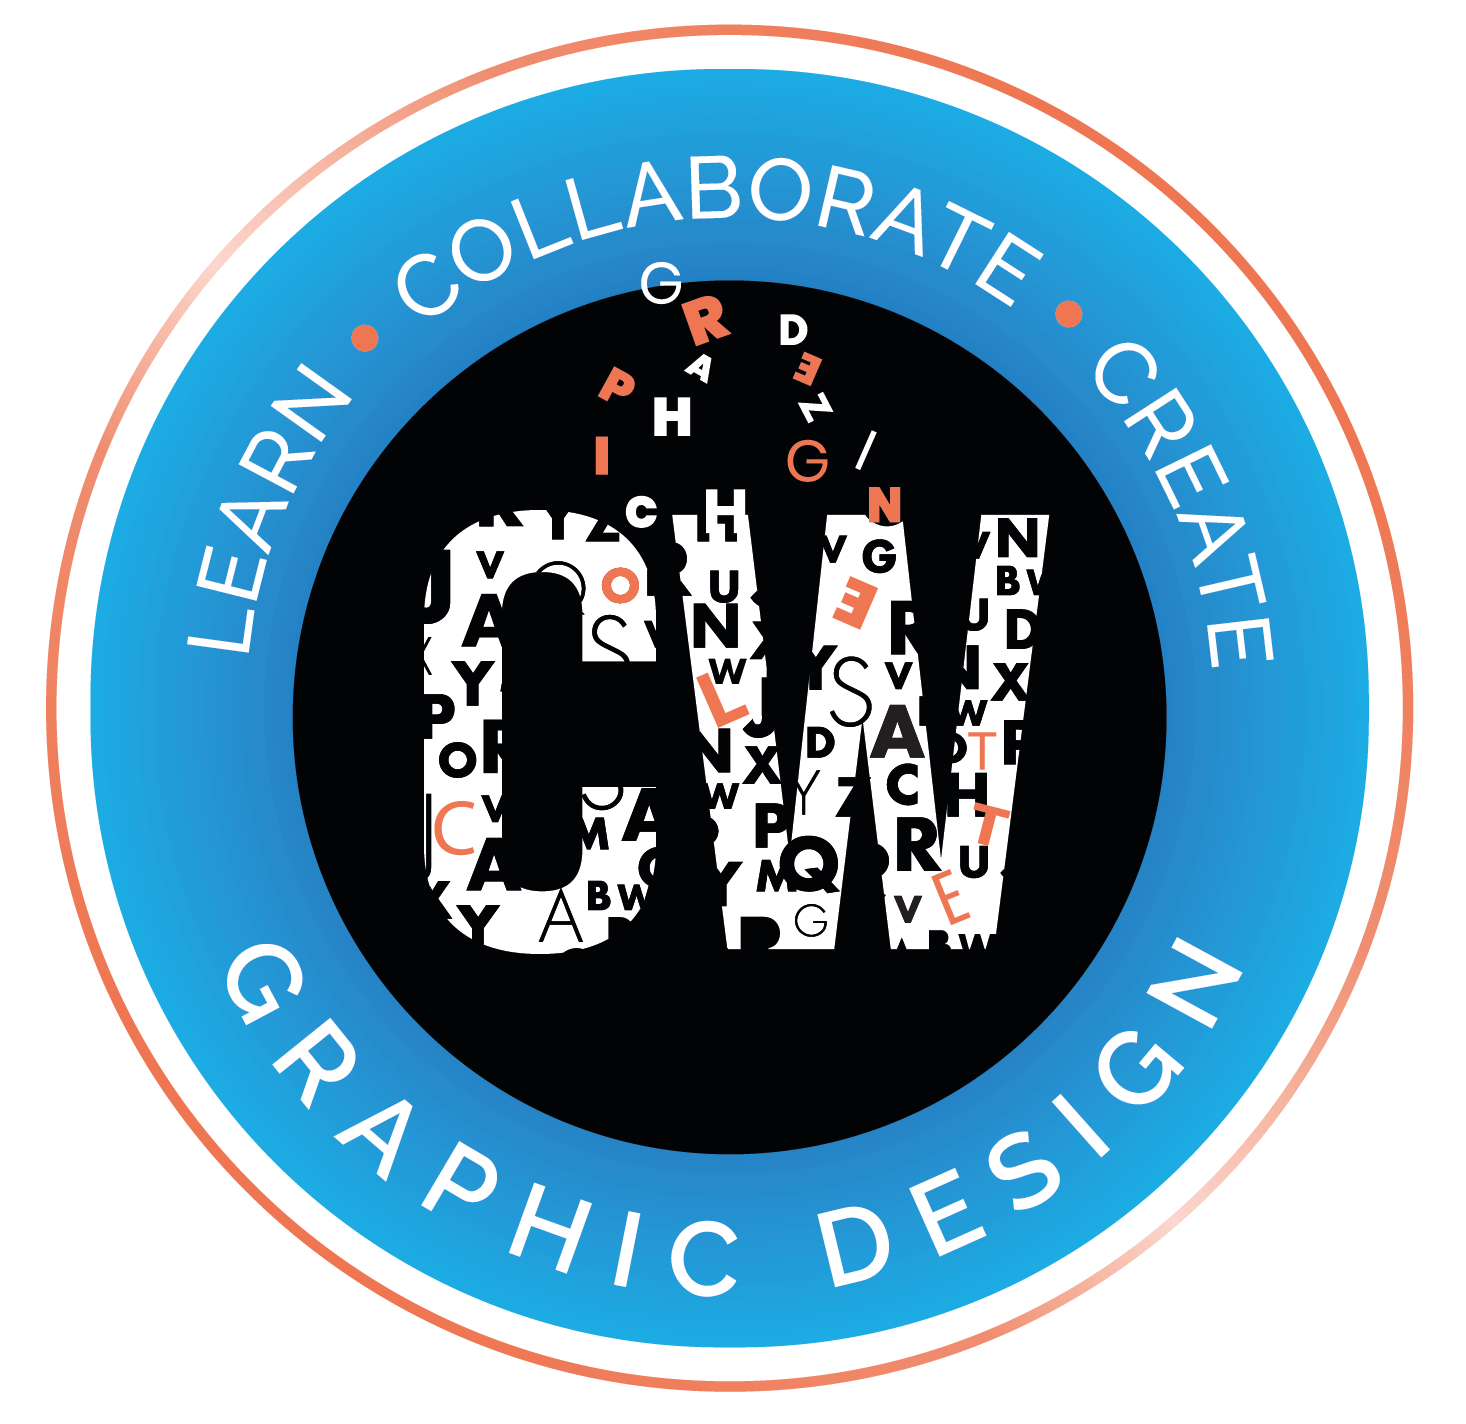 Colette Wilson - Web Developer and Graphic Designer logo in blue circle